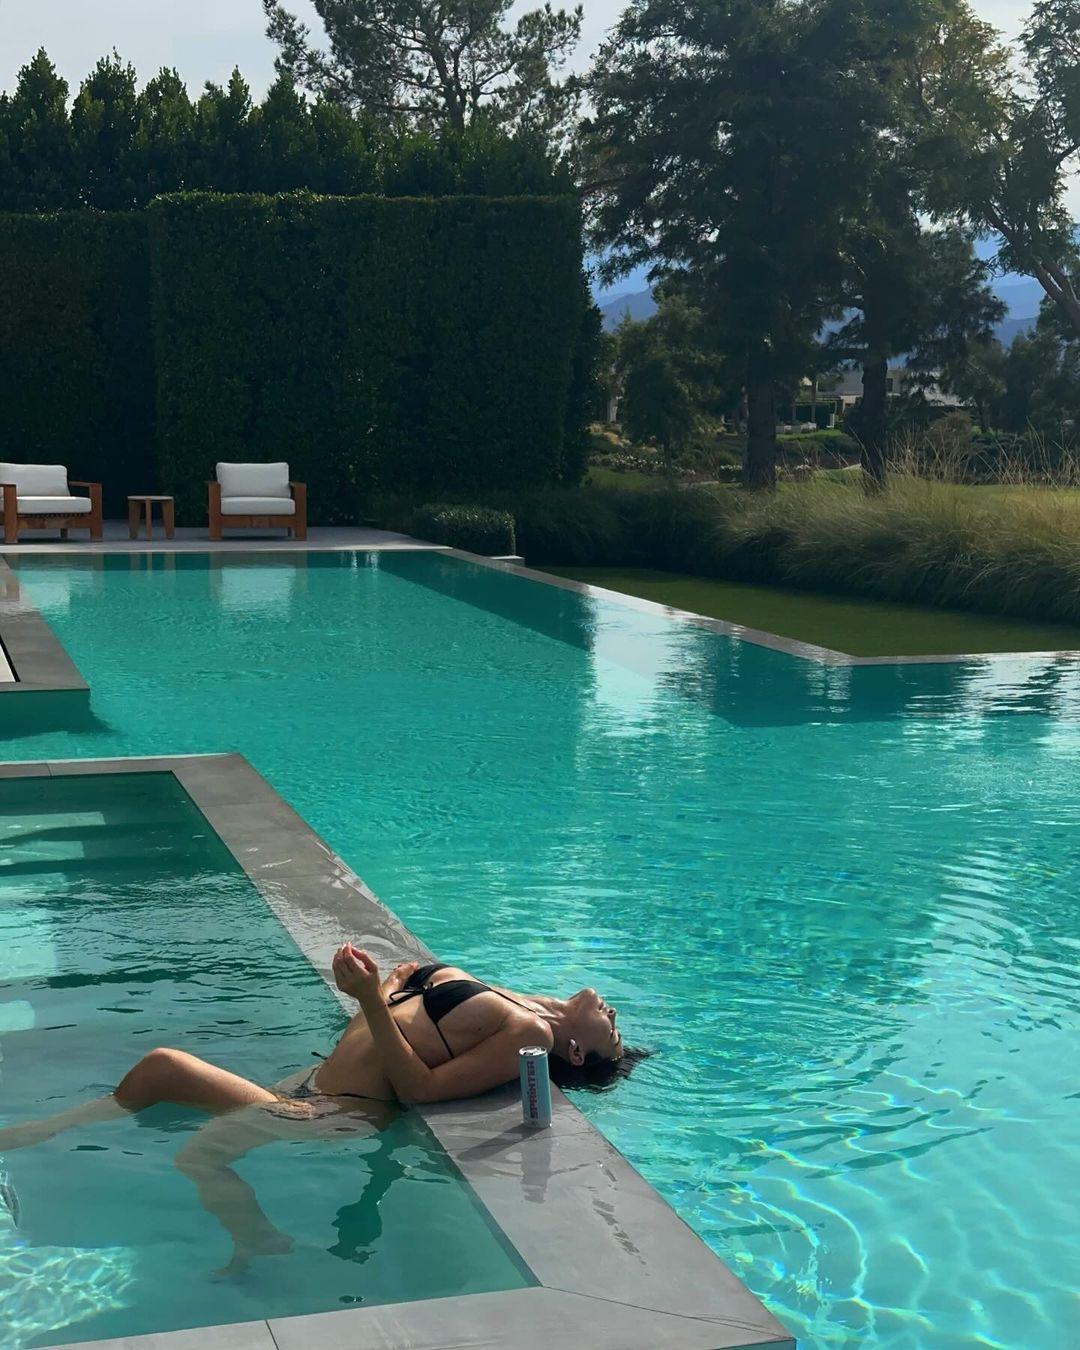 Kylie Jenner relaxing in the pool in hr black bikini.